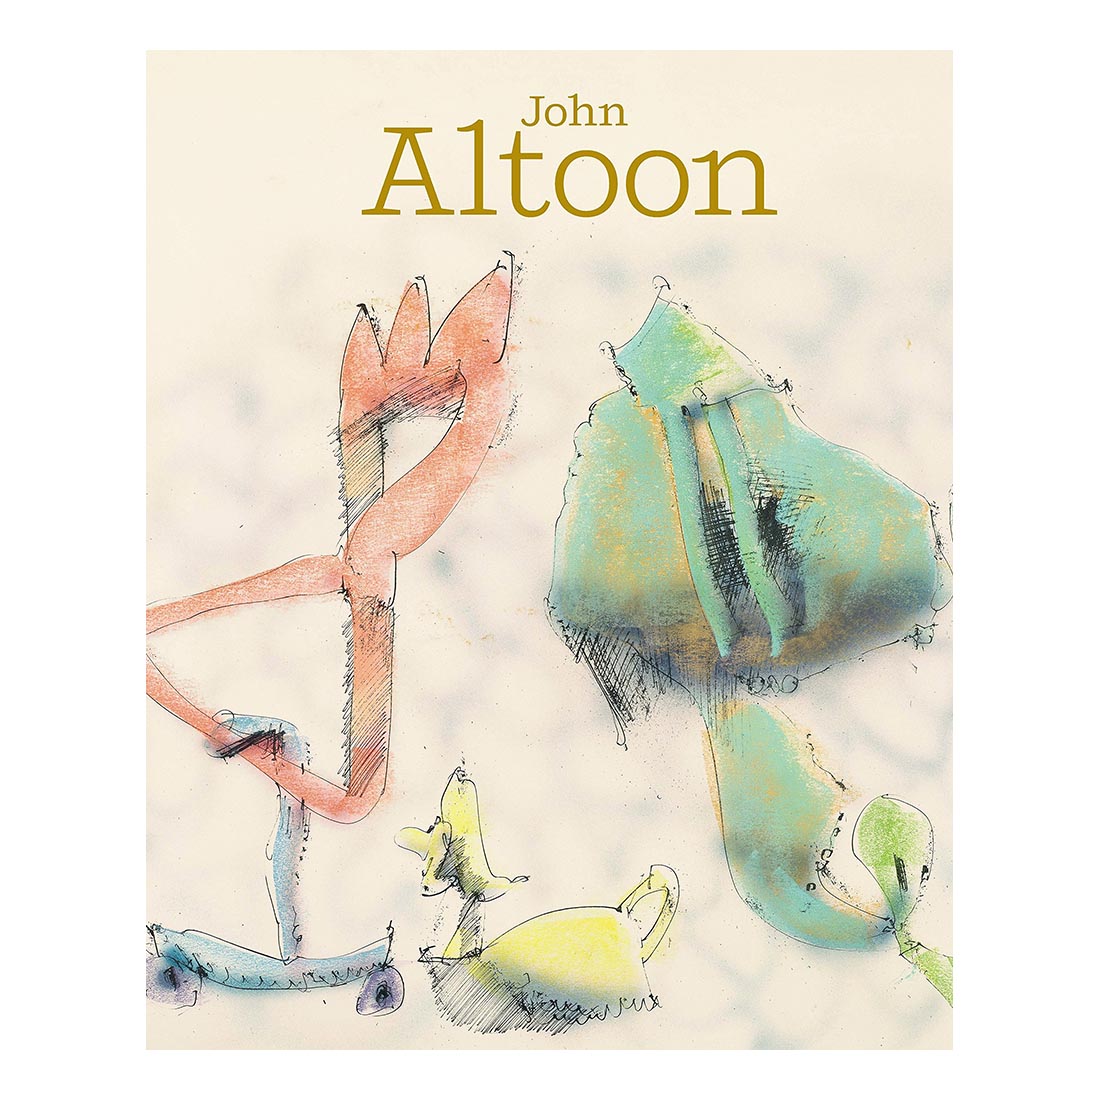 John Altoon